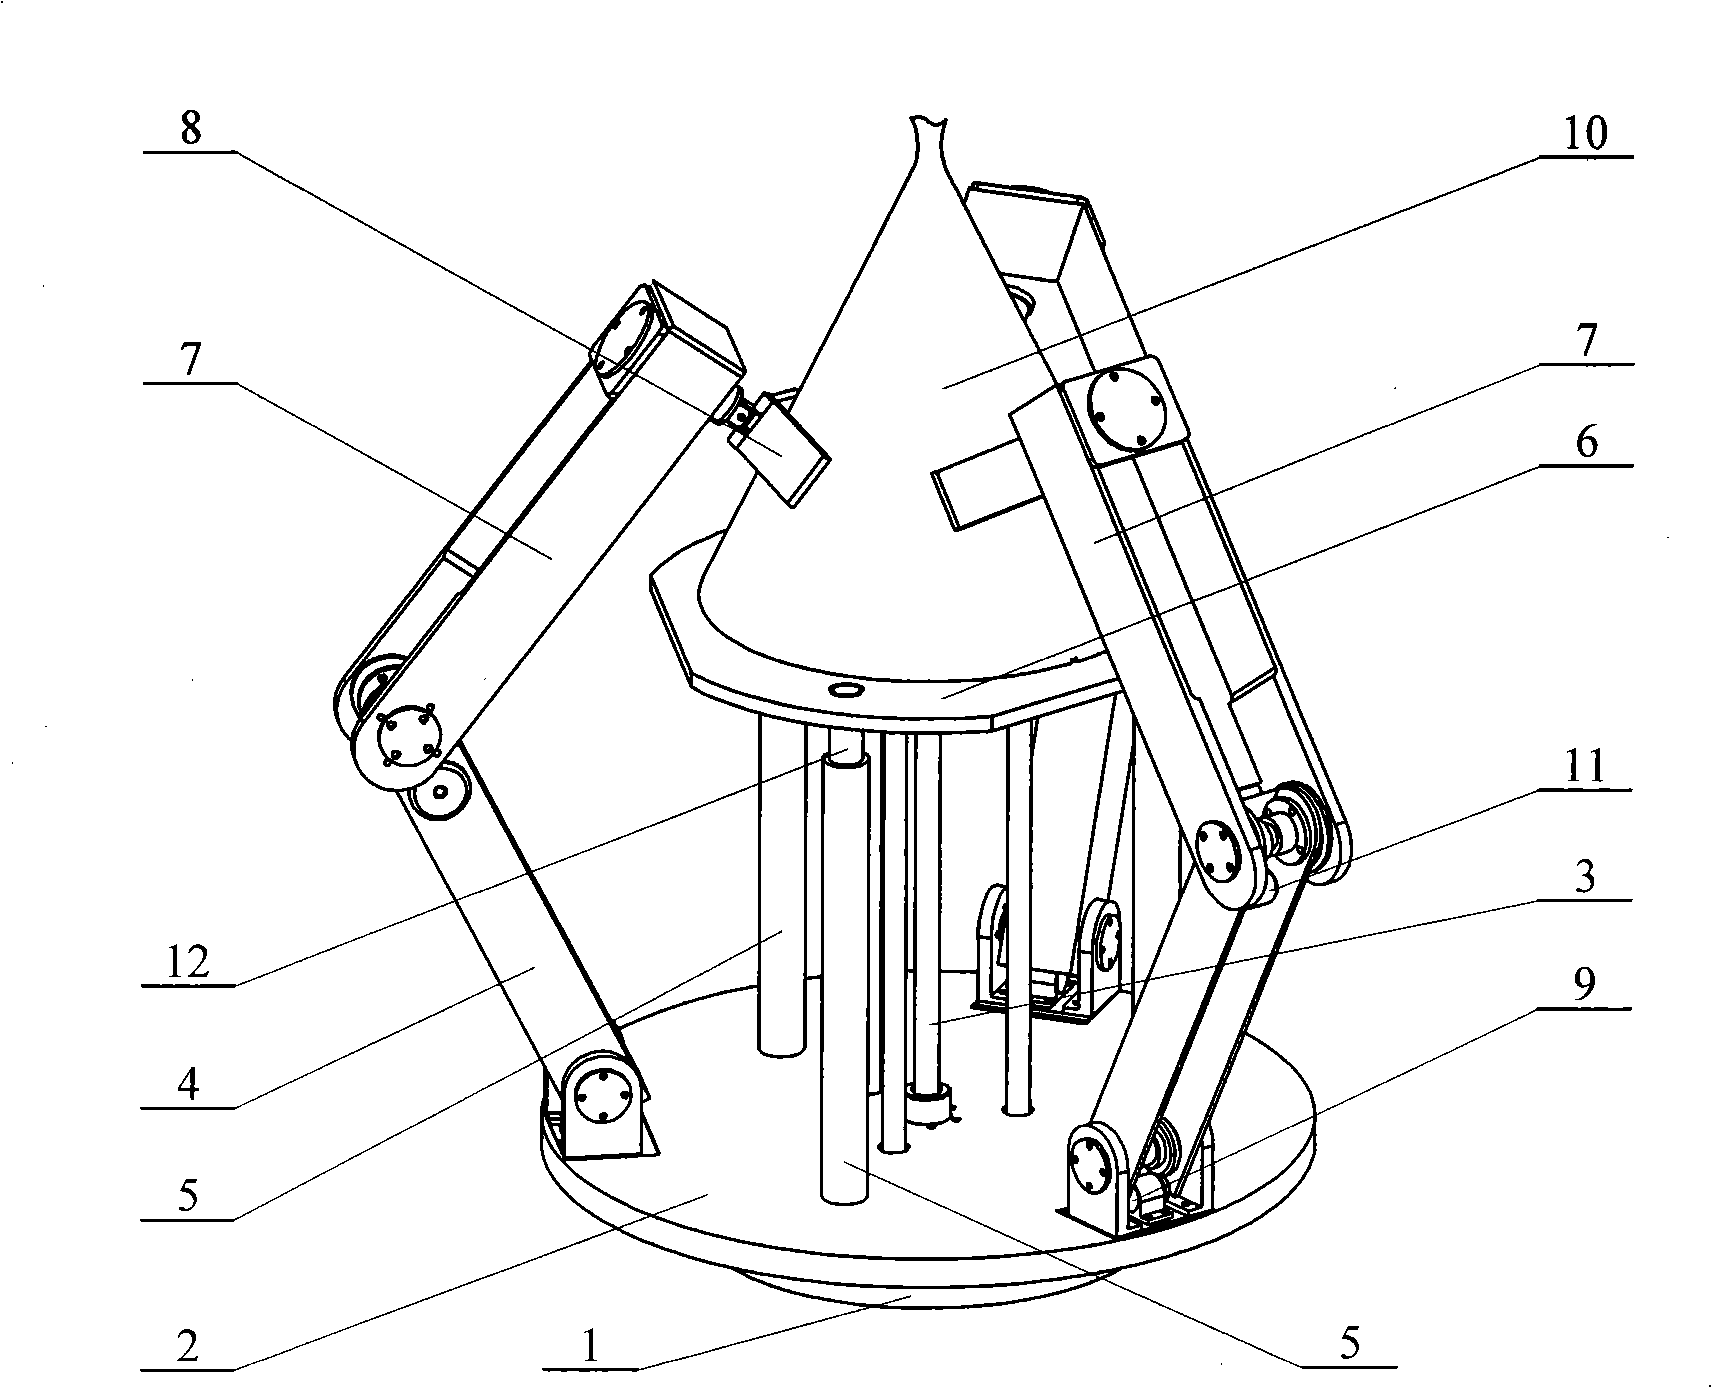 Three-arm type noncooperative target docking mechanism